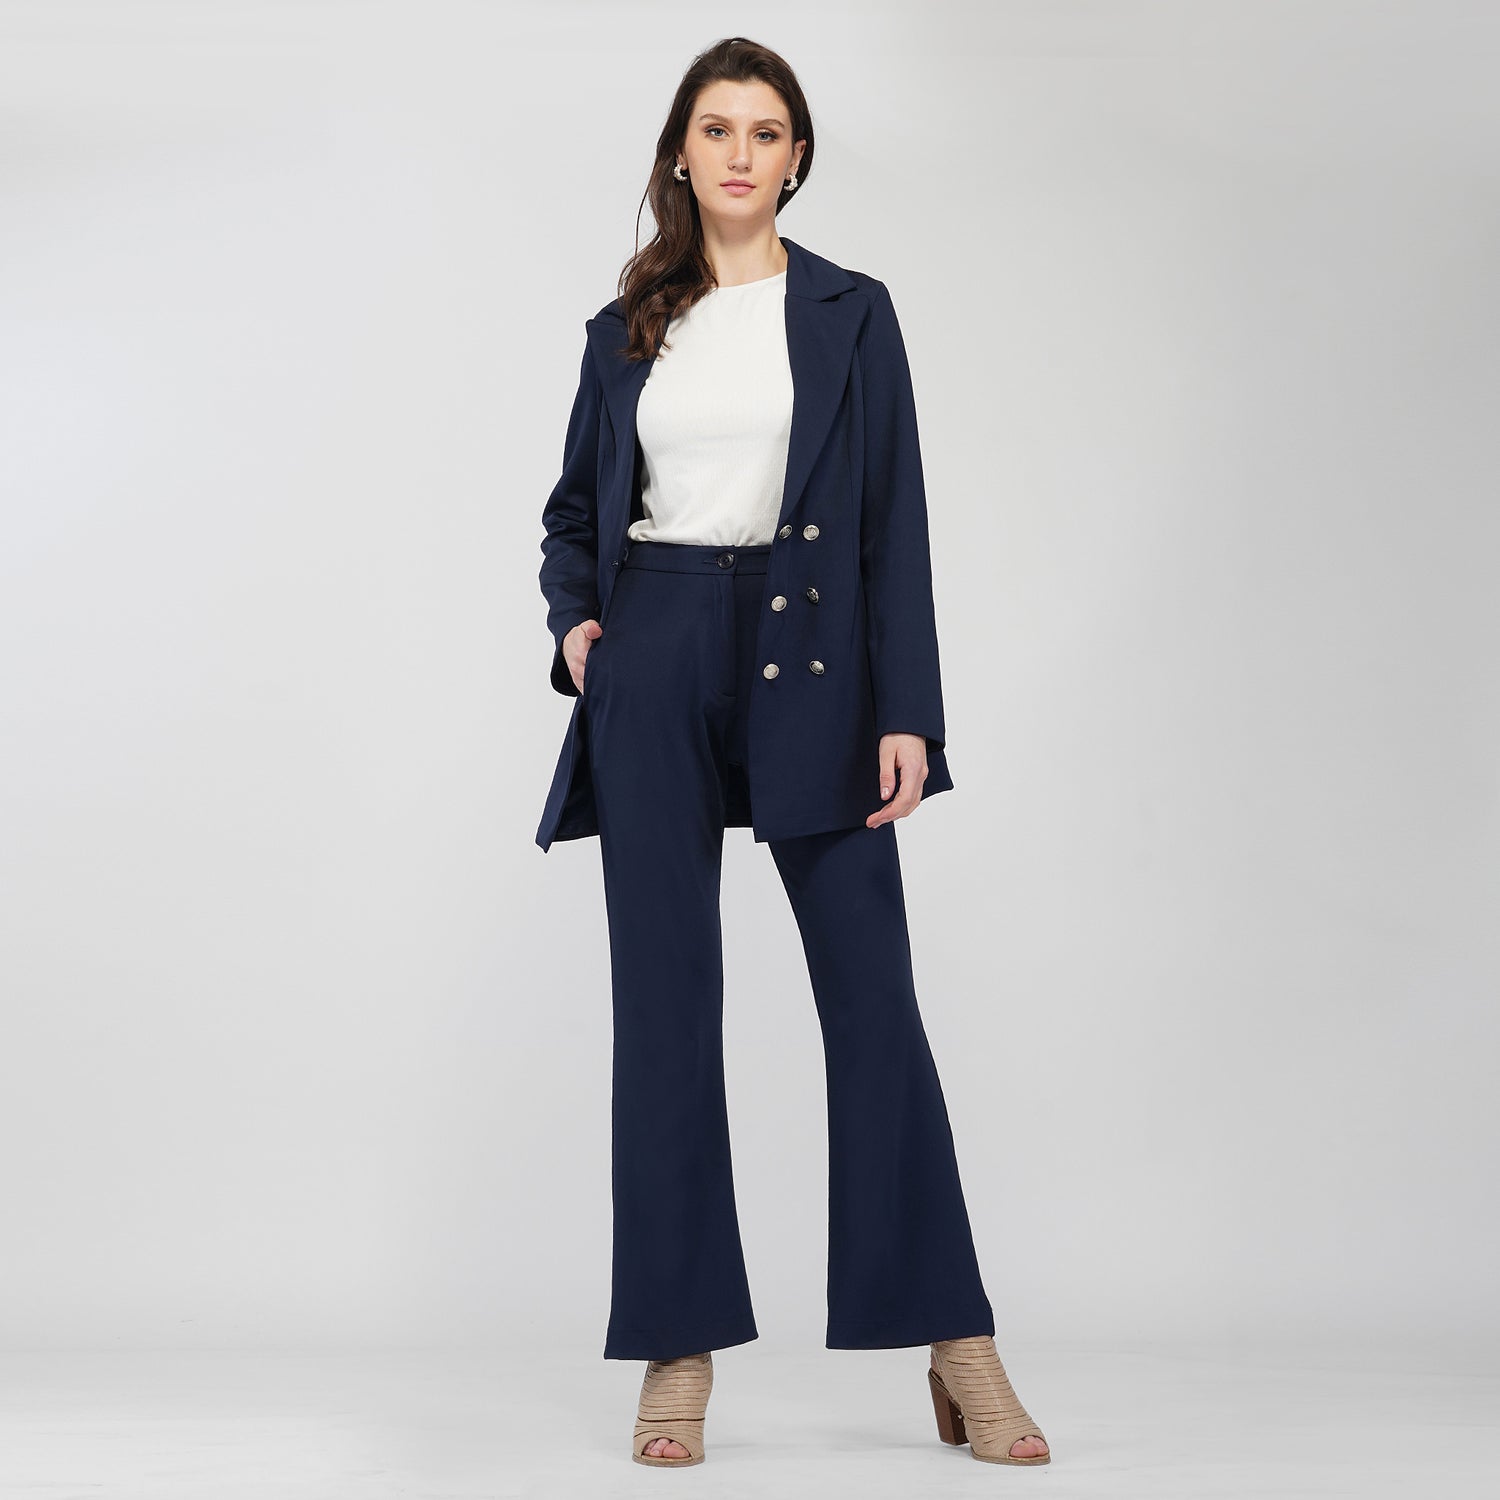 SLAY. Women's Formal Navy Blue Blazer Pant Co-ord Set